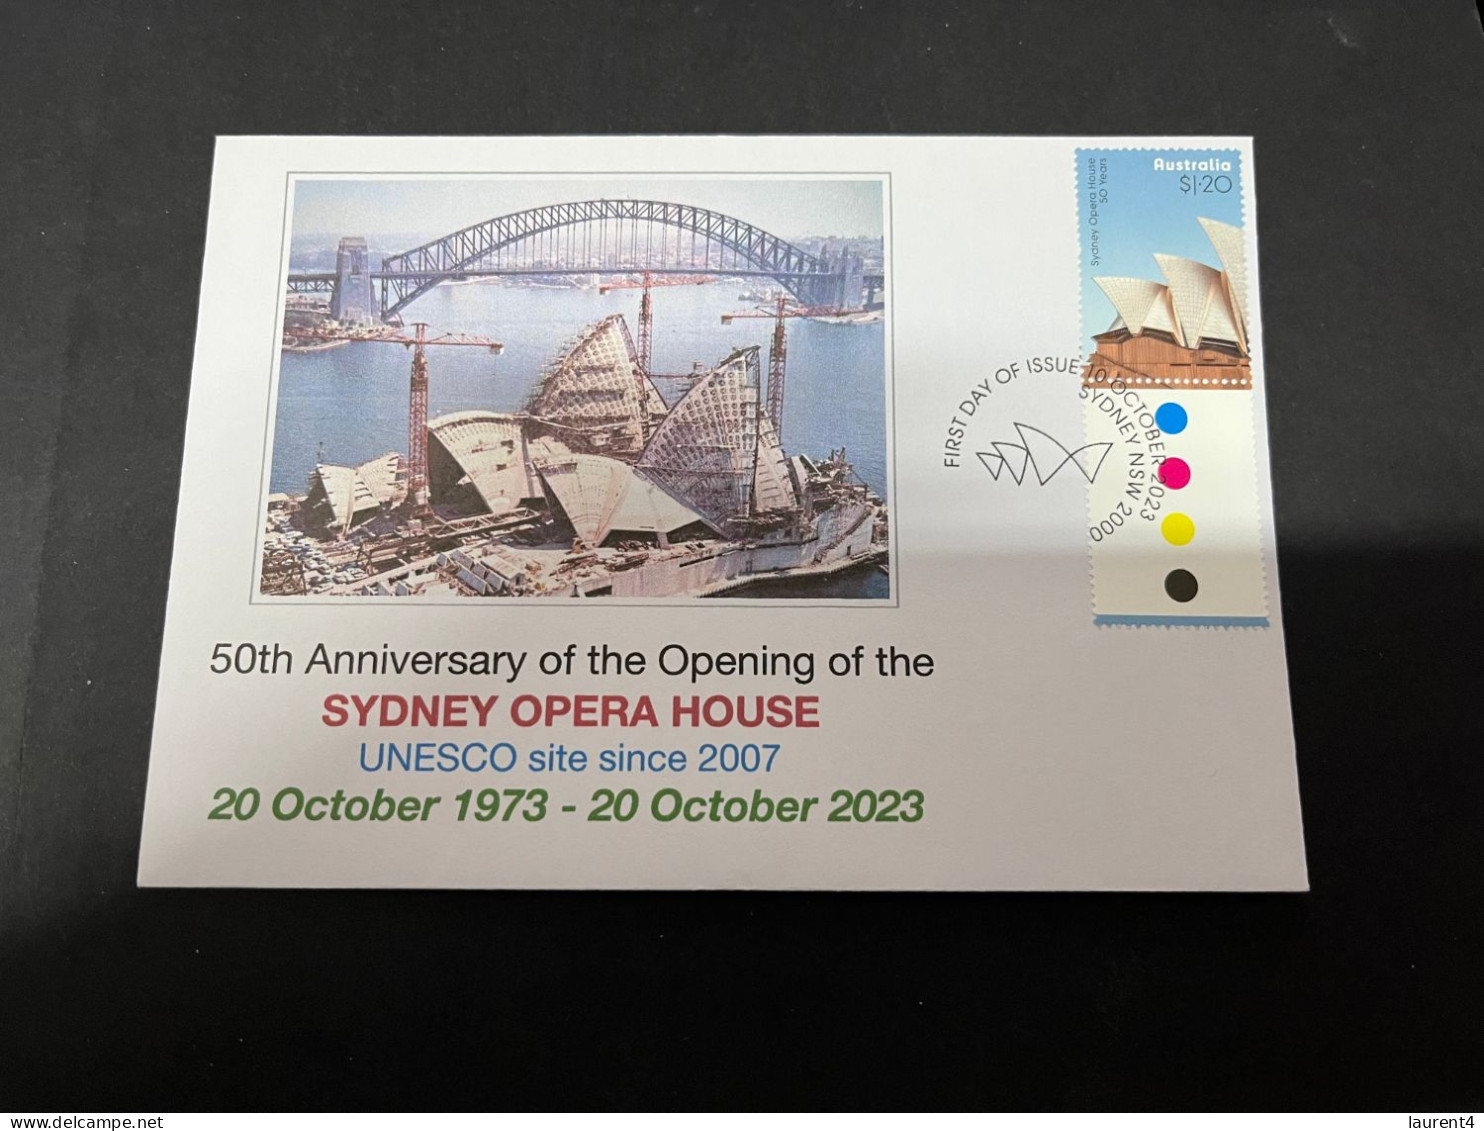 20-10-2023 (4 U 43) Sydney Opera House Celebrate 50th Anniversary (10-10-2023) FDI Cover (under Construction + Bridge) - Cartas & Documentos